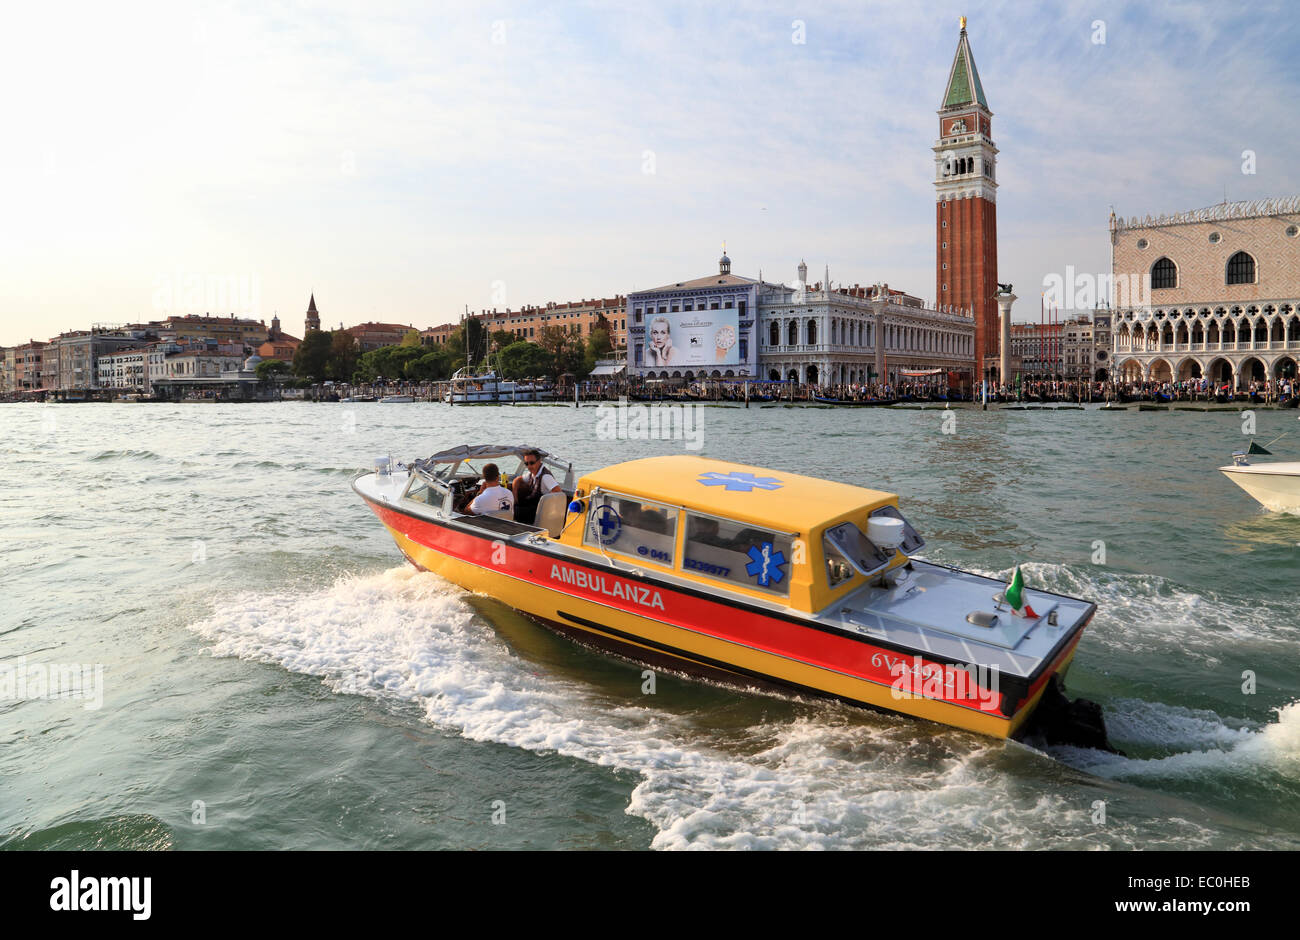 Ambulanza - Venezia - Ambulance Emergenza barco Foto de stock